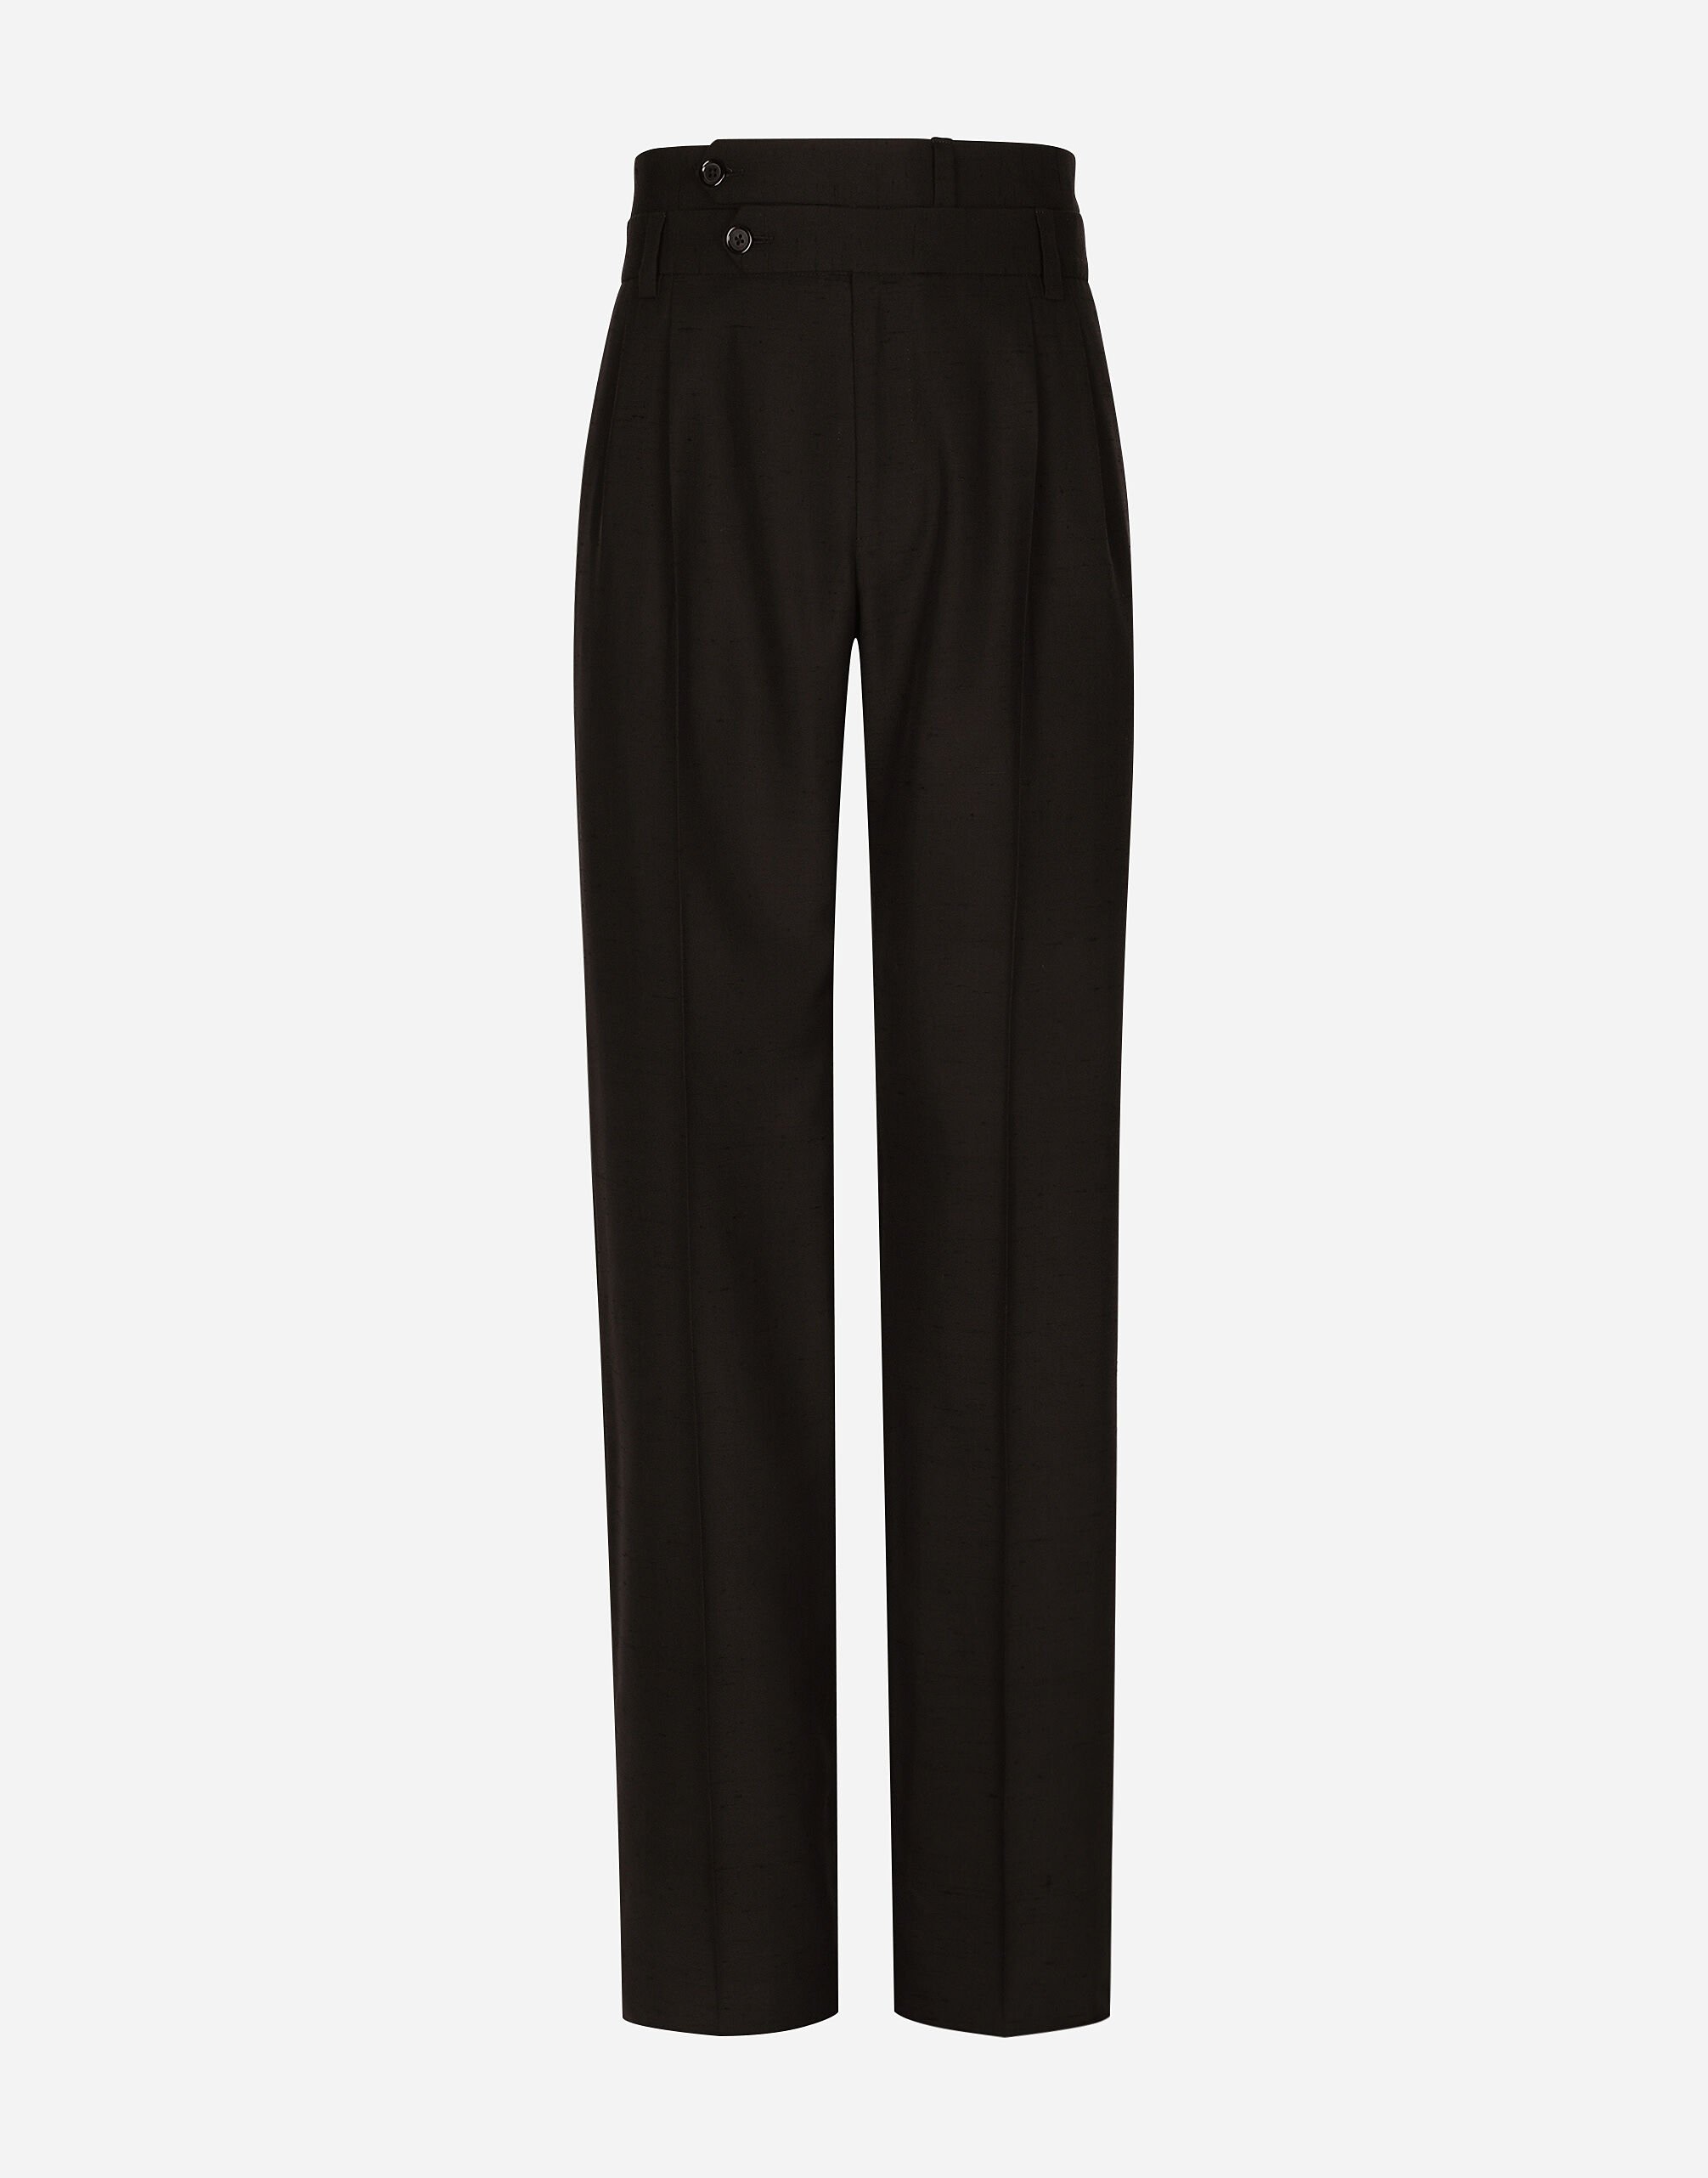 Dolce & Gabbana Tailored shantung silk and cotton pants Black G2PQ4TGG150